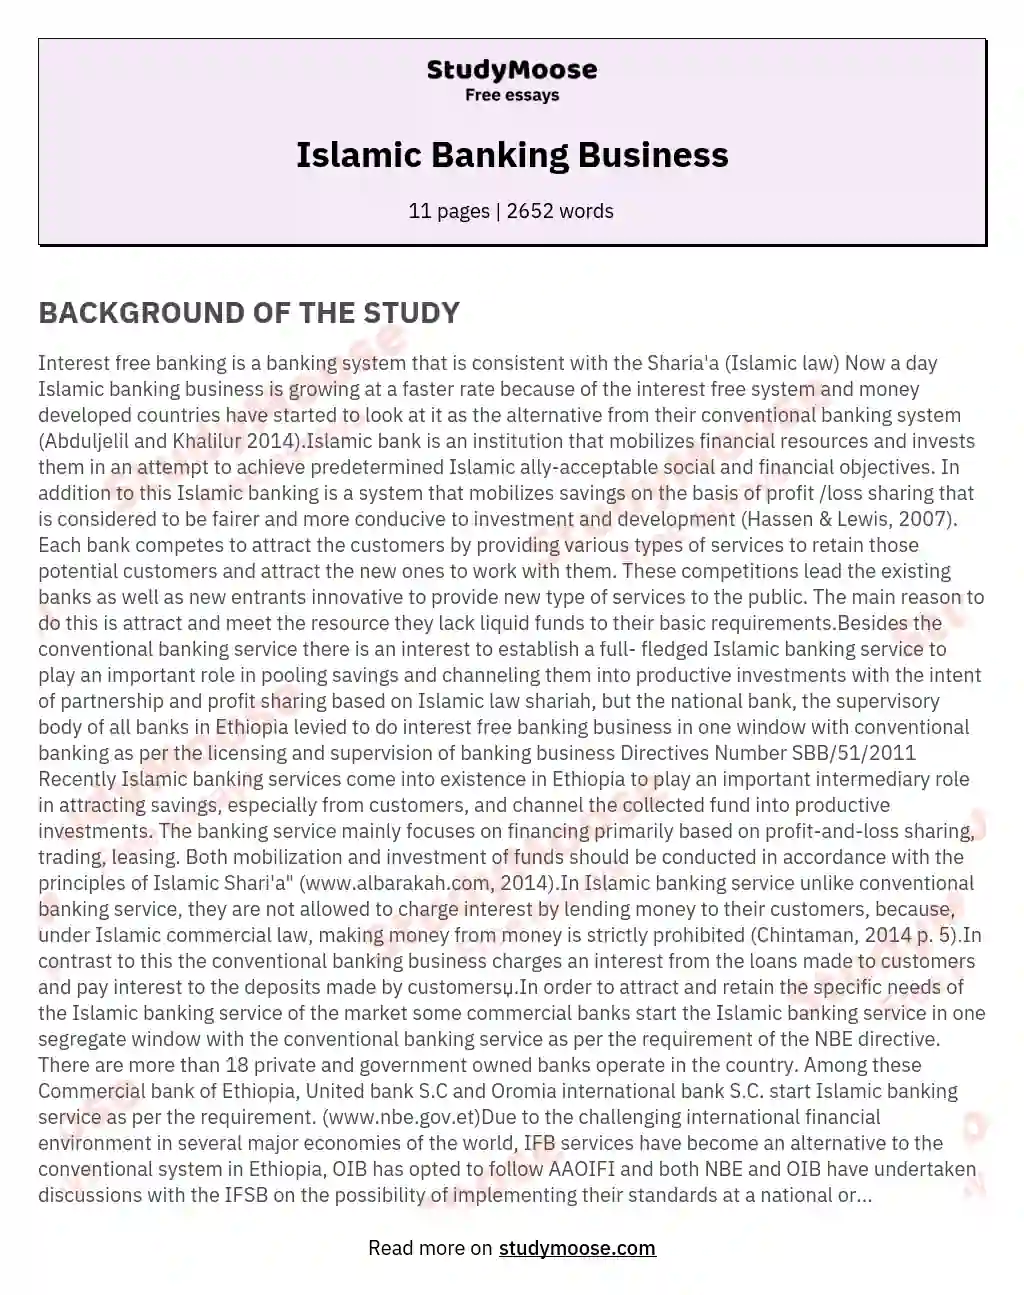 Islamic Banking Business essay